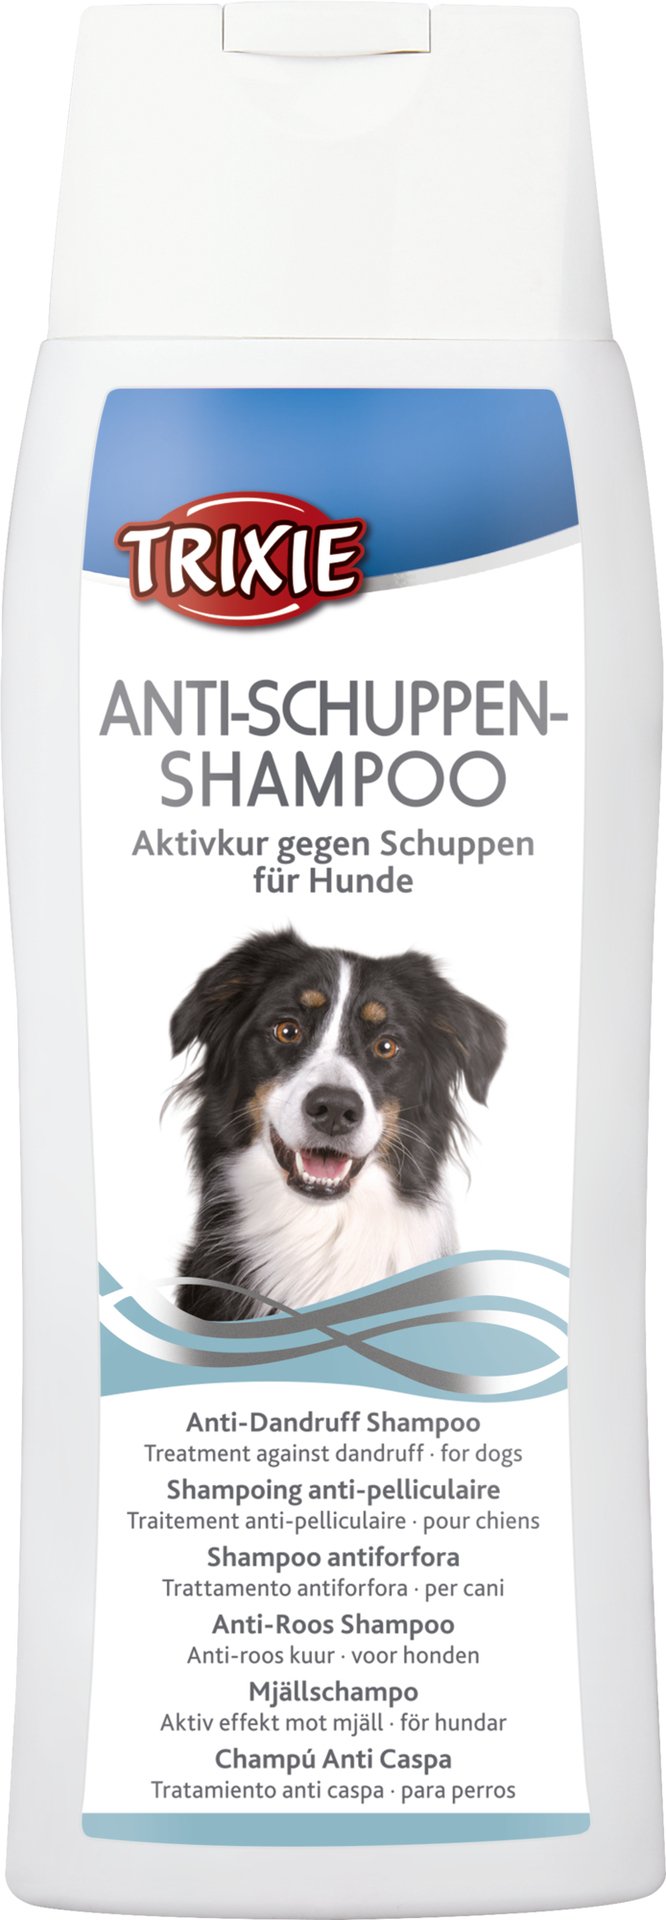 Trixie Heimtierbedarf Anti-Schuppen-Shampoo